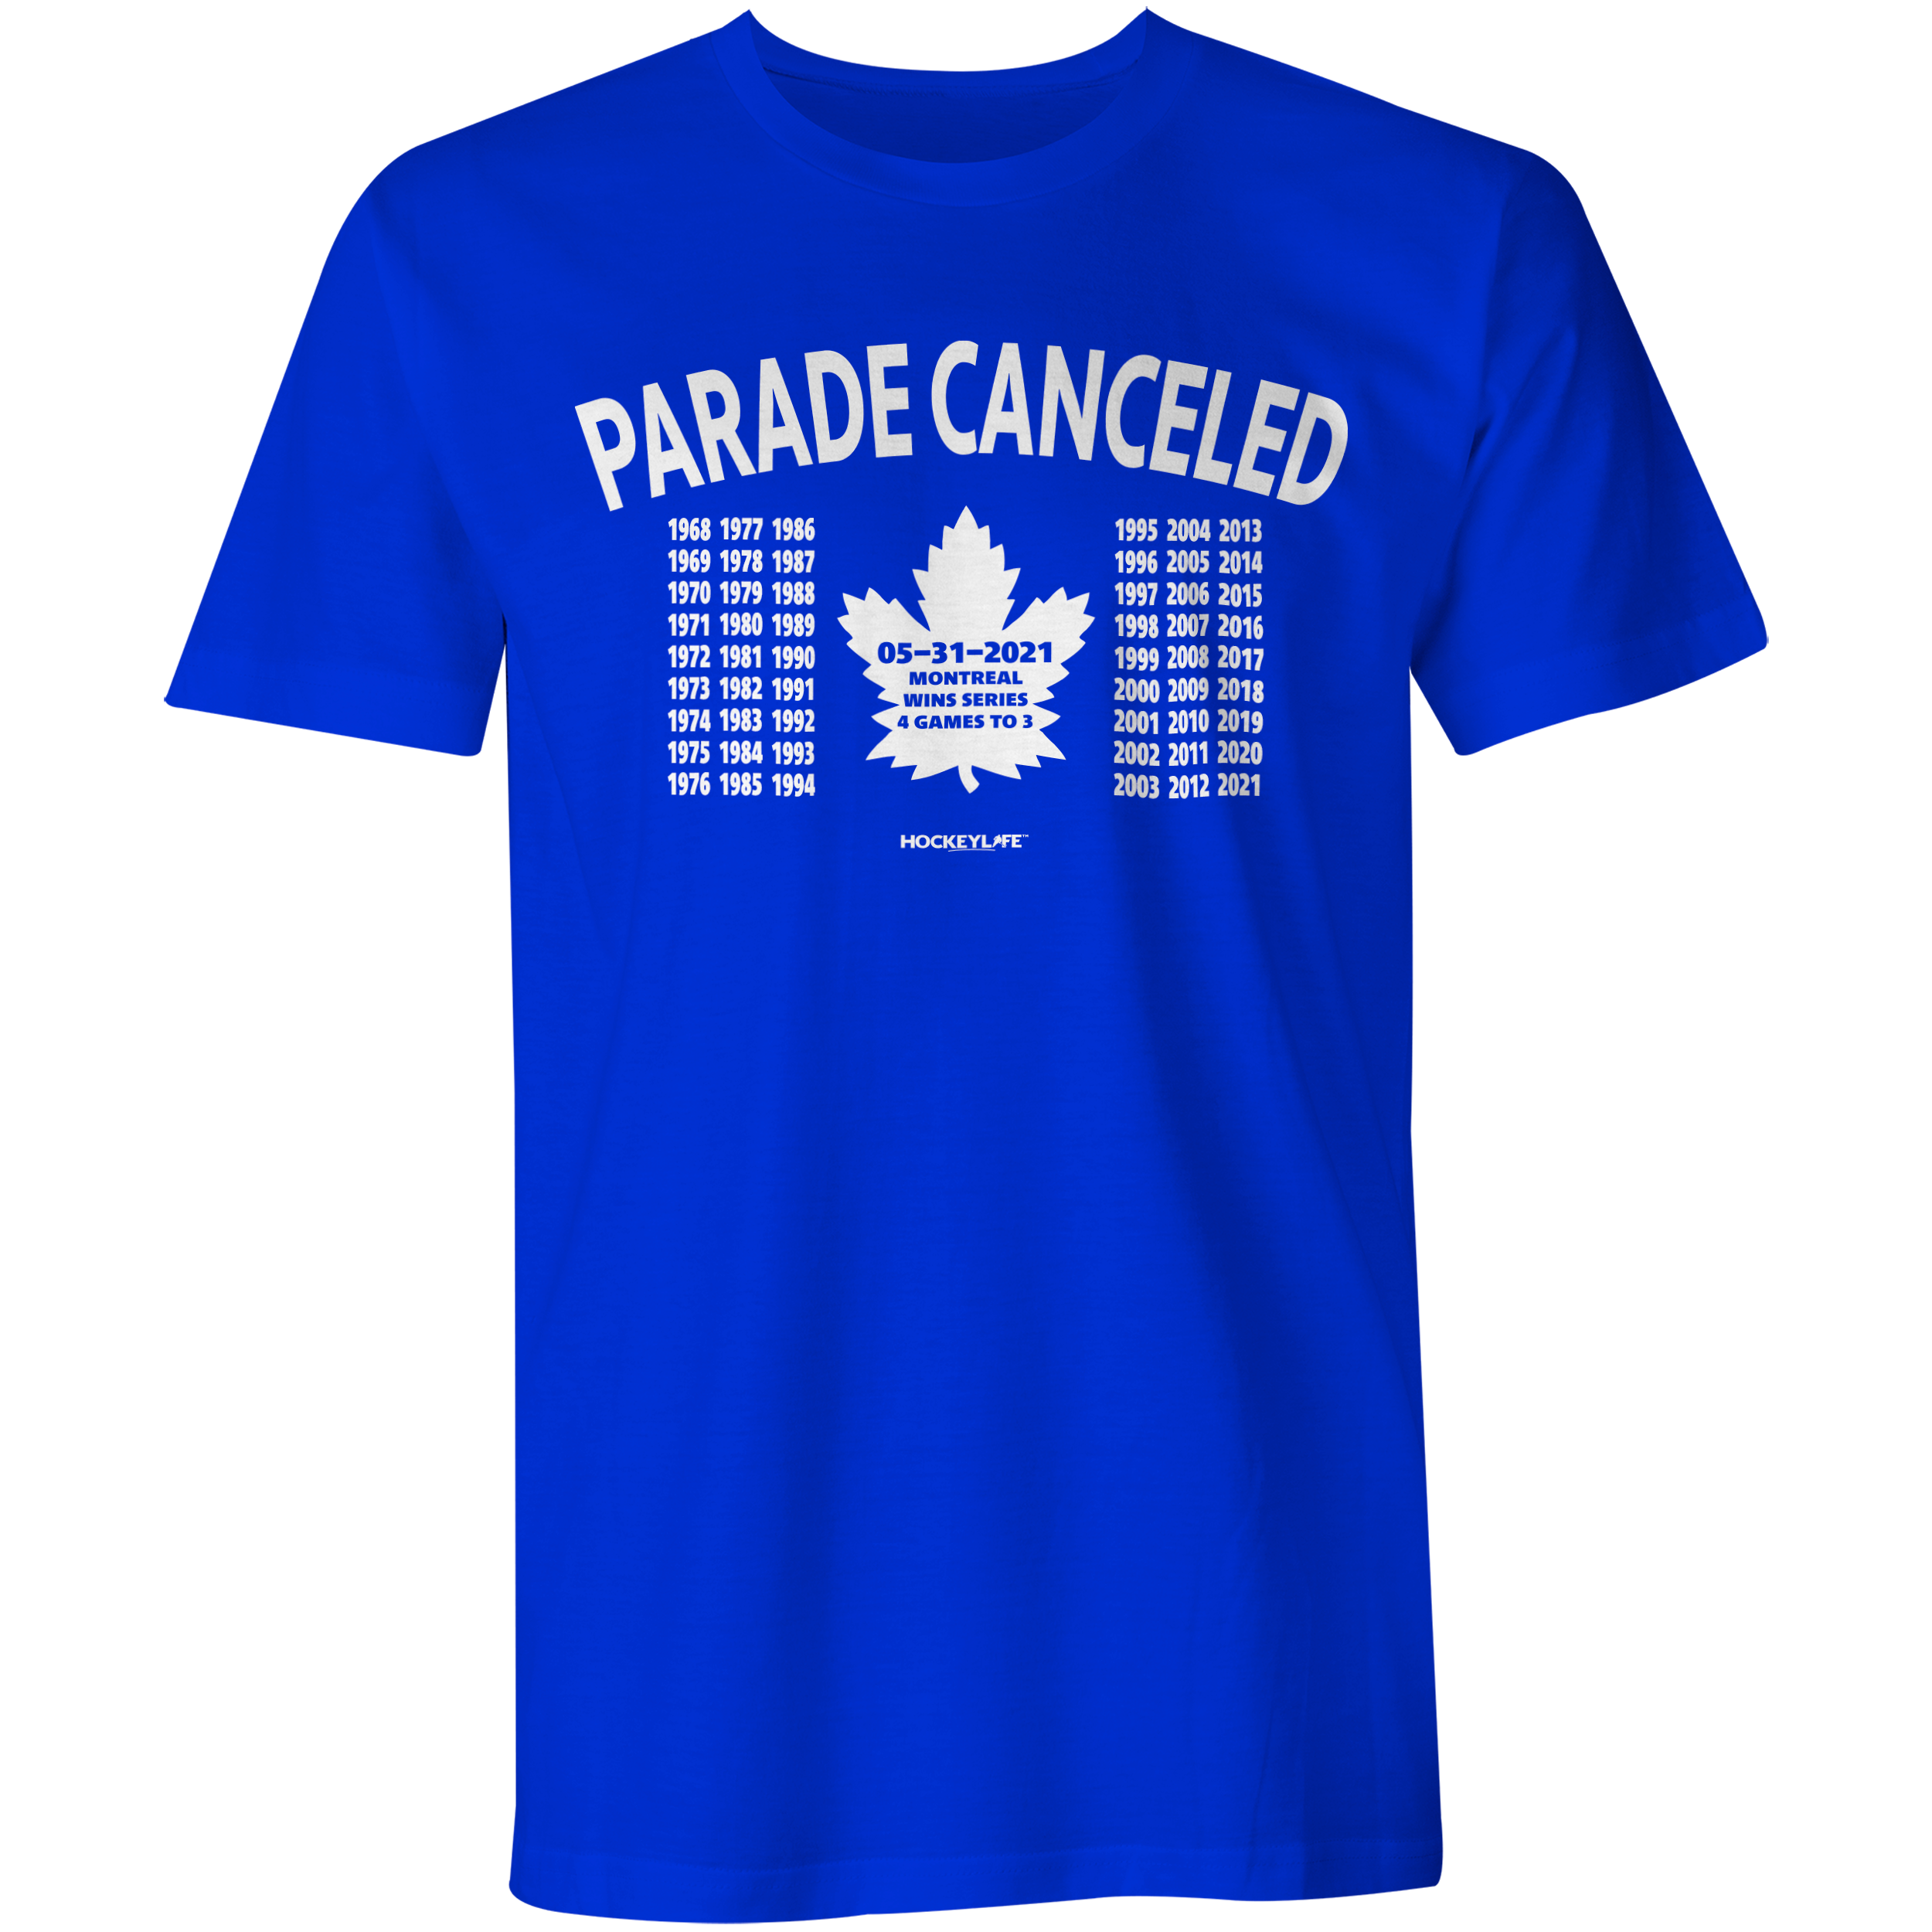 Samrich Sports Clothing, Inc. Parade Canceled Tee Shirt XL